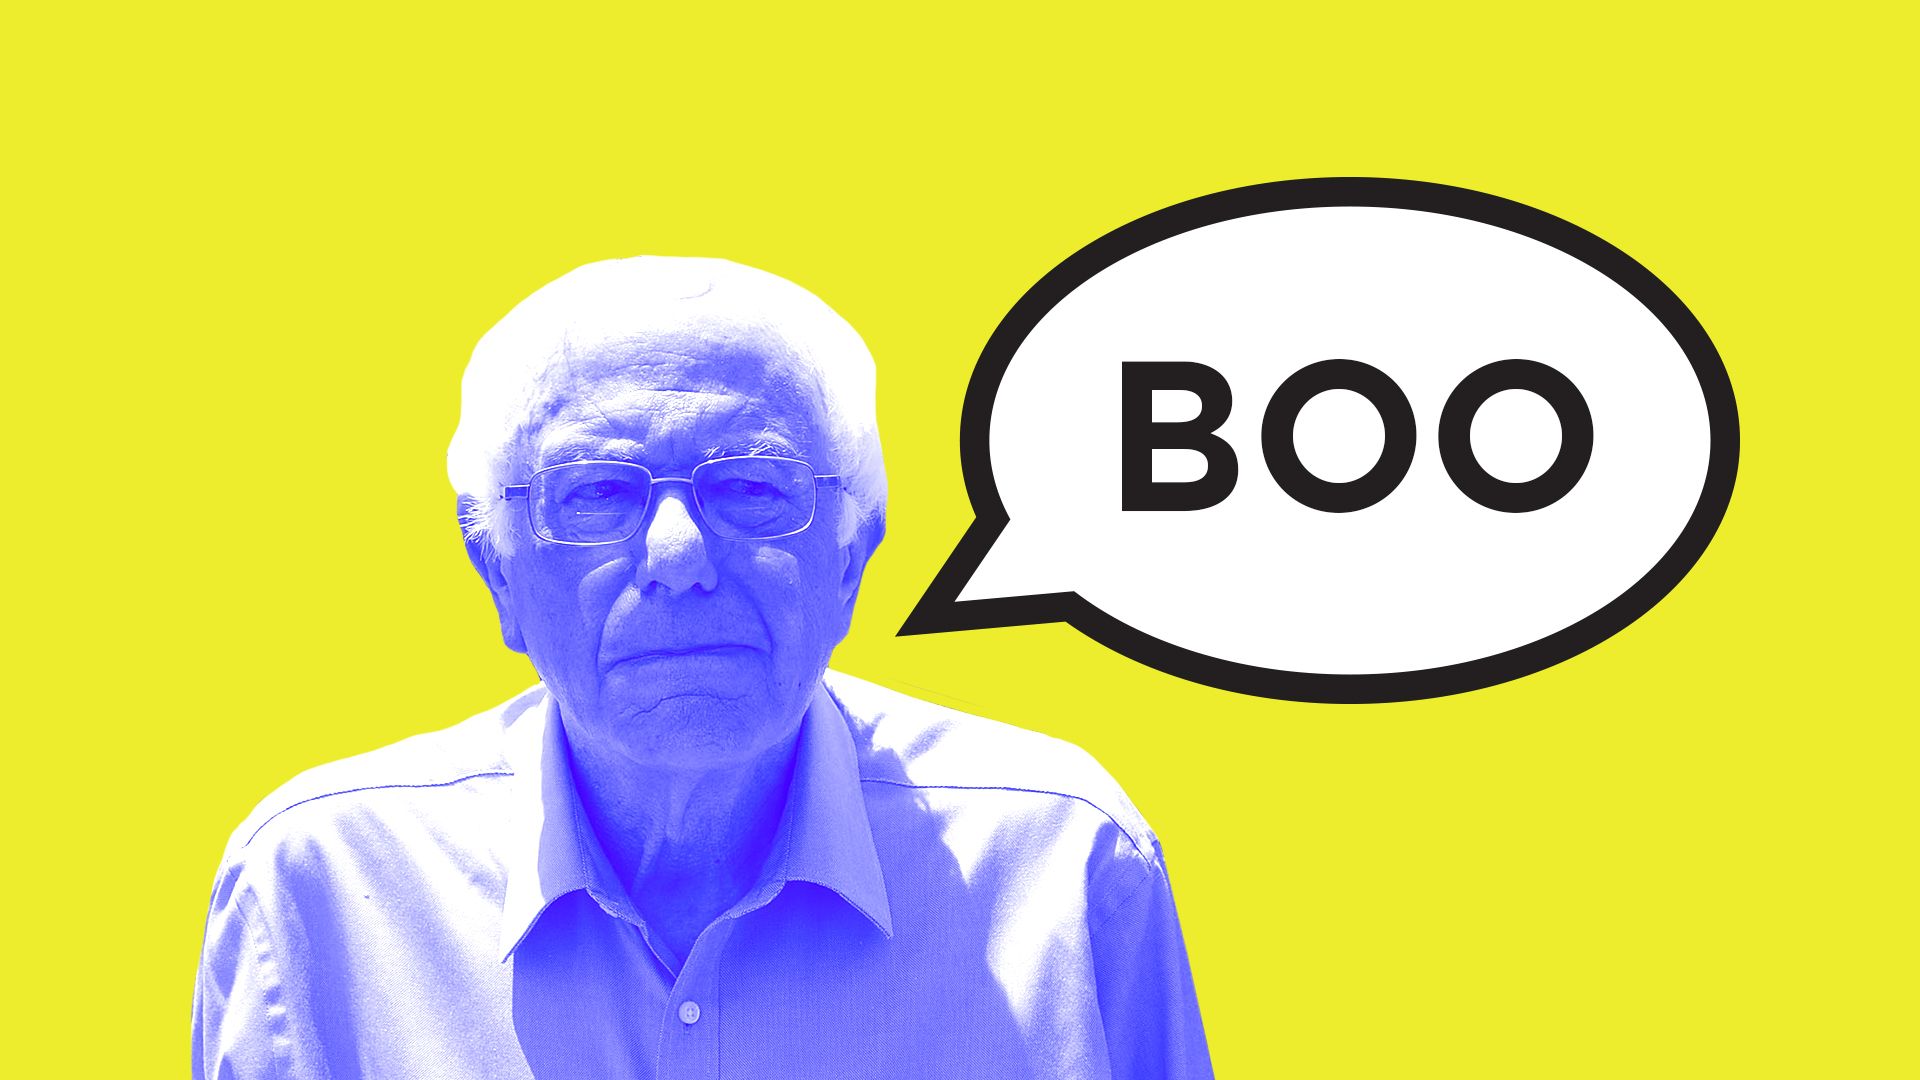 Illustration of Bernie Sanders saying “Boo” 